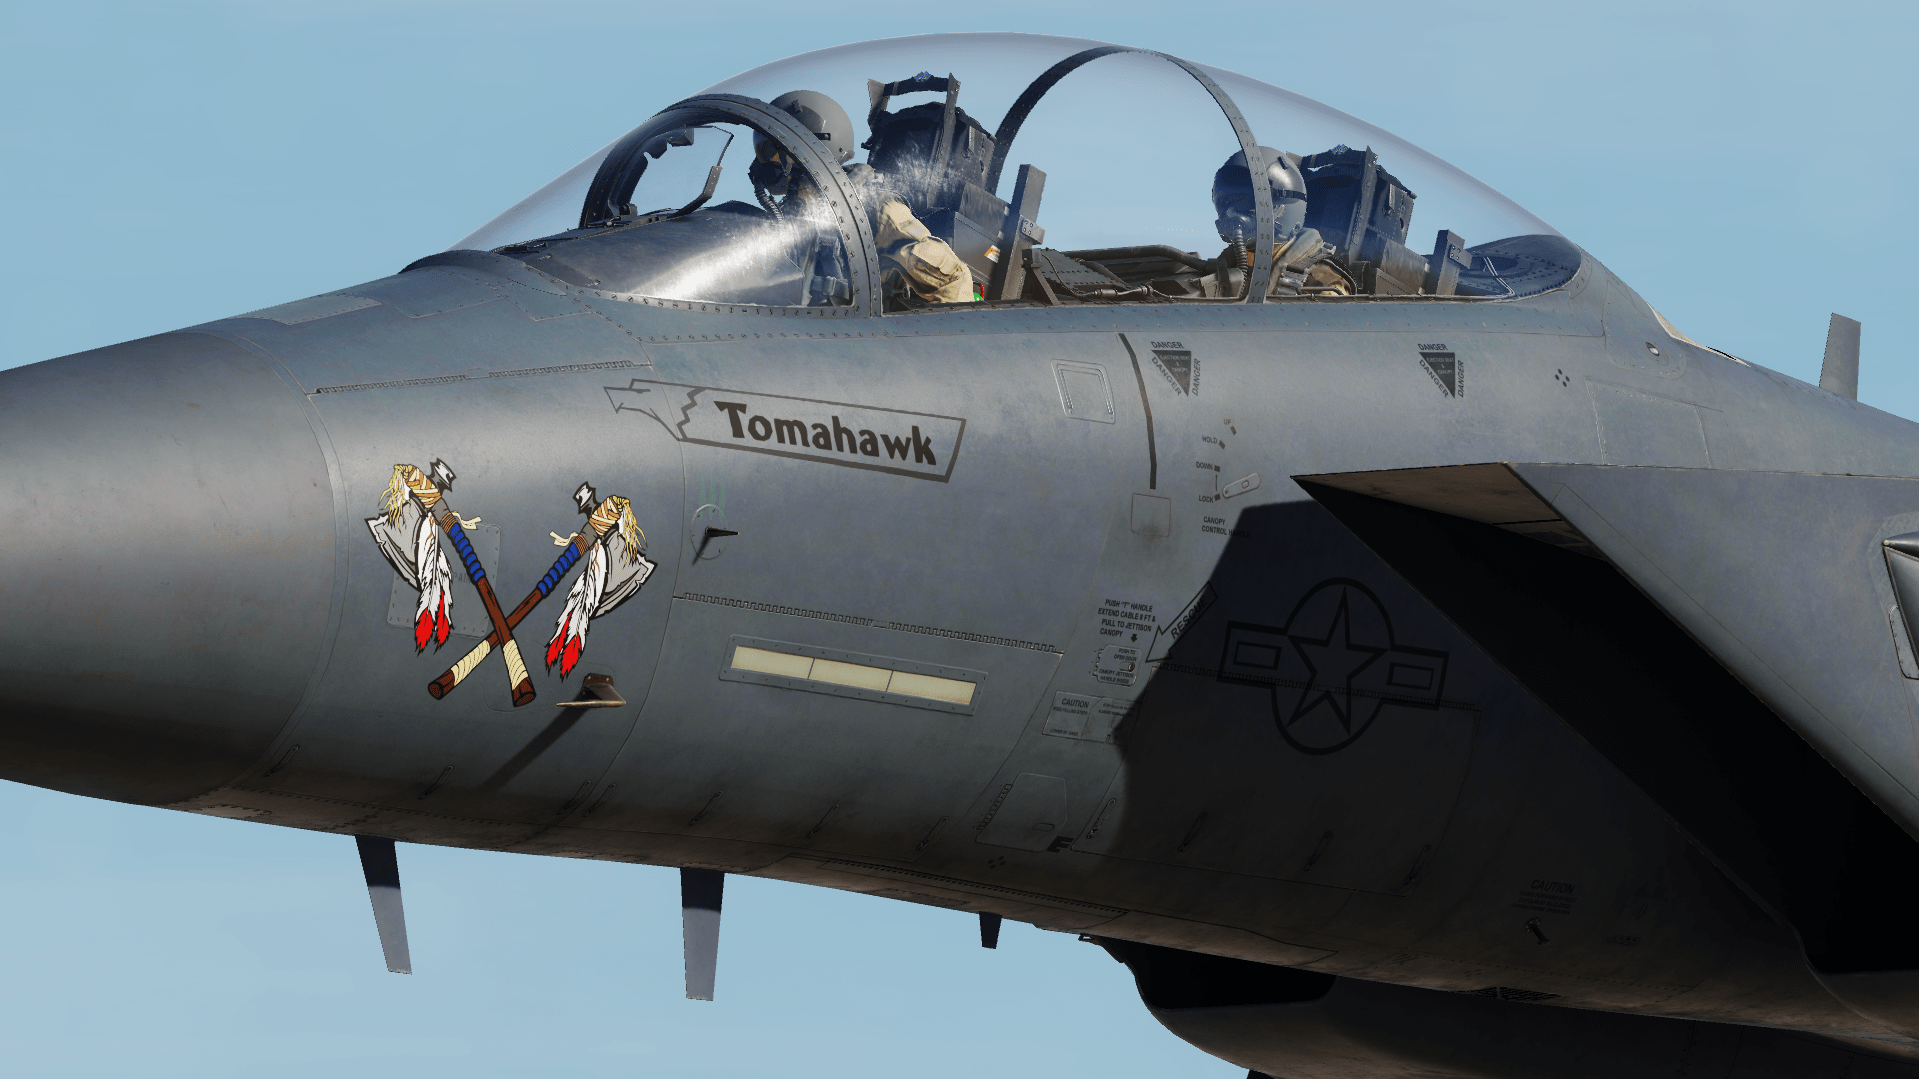 F-15E Strike eagle SJ 87-199 "Tomahawk"